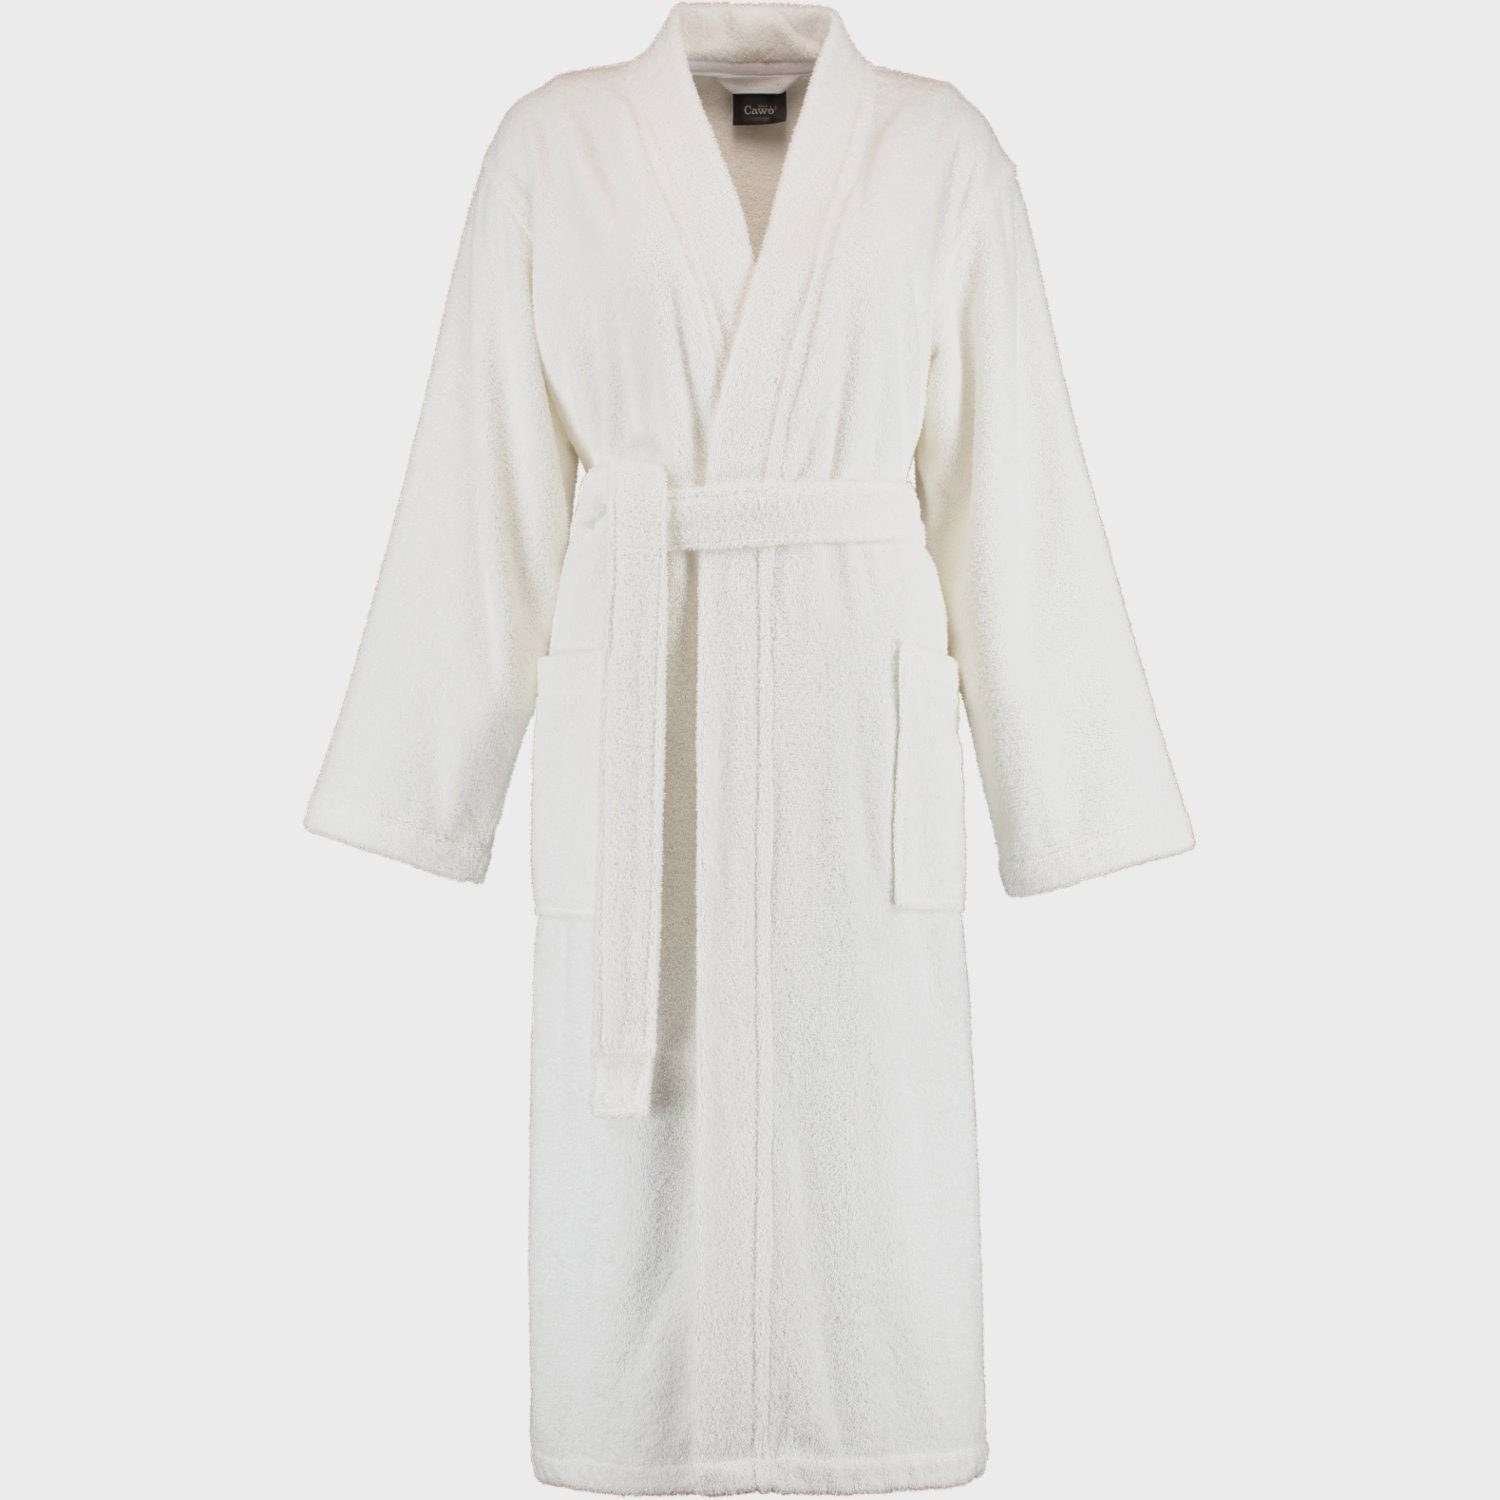 Gürtel Bademantel Kimono Damen Kimono-Kragen, Form, Weiß Cawö Damenbademantel Baumwolle,